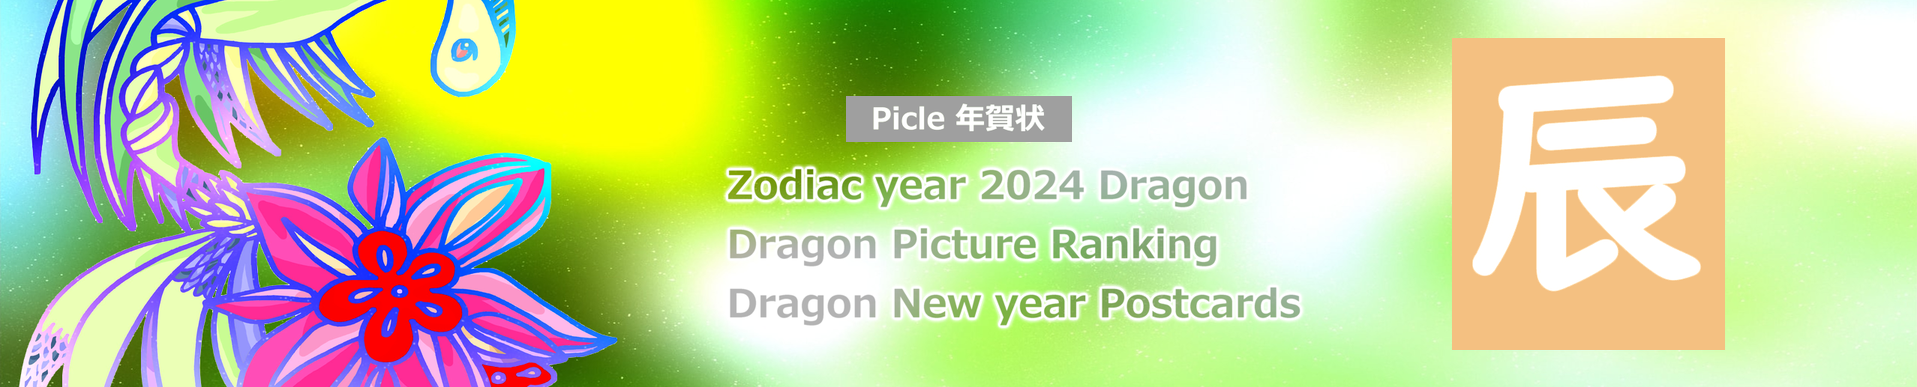 Picle年賀状 2024 राशि चक्र ड्रैगन कला मुक्त चित्र सामग्री मूल टेम्पलेट कार्ड छवि मुद्रण डाउनलोड